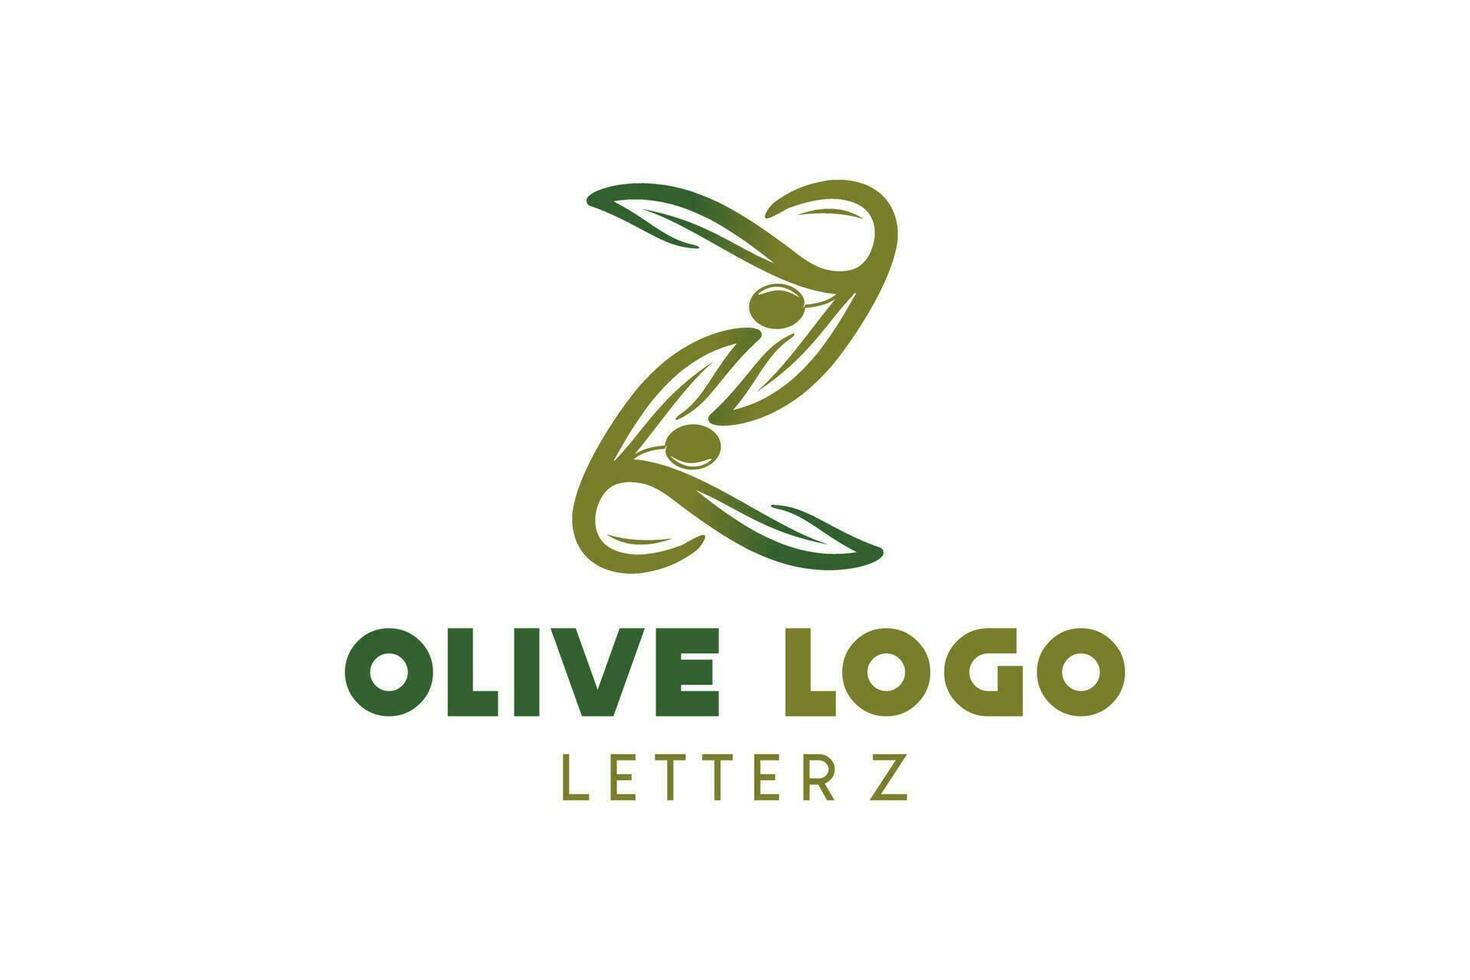 Oliva logotipo Projeto com carta z conceito, natural verde Oliva vetor ilustração